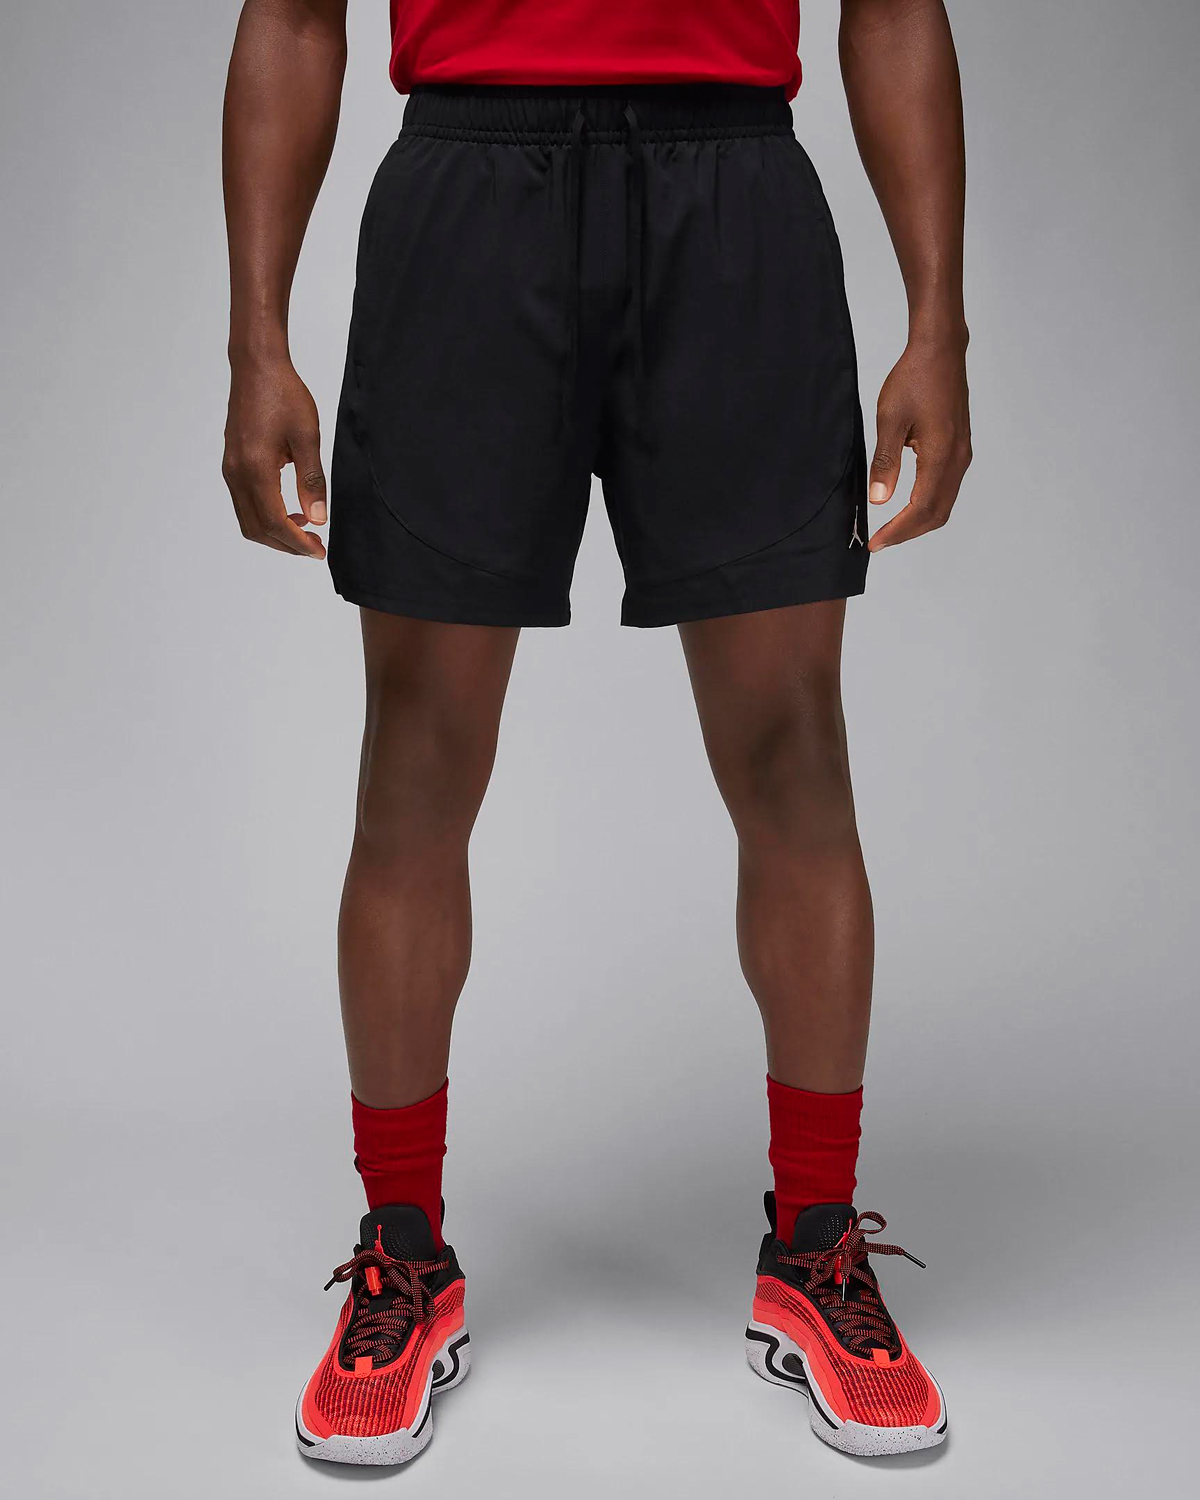 Jordan-Sport-Woven-Shorts-Black-White-1